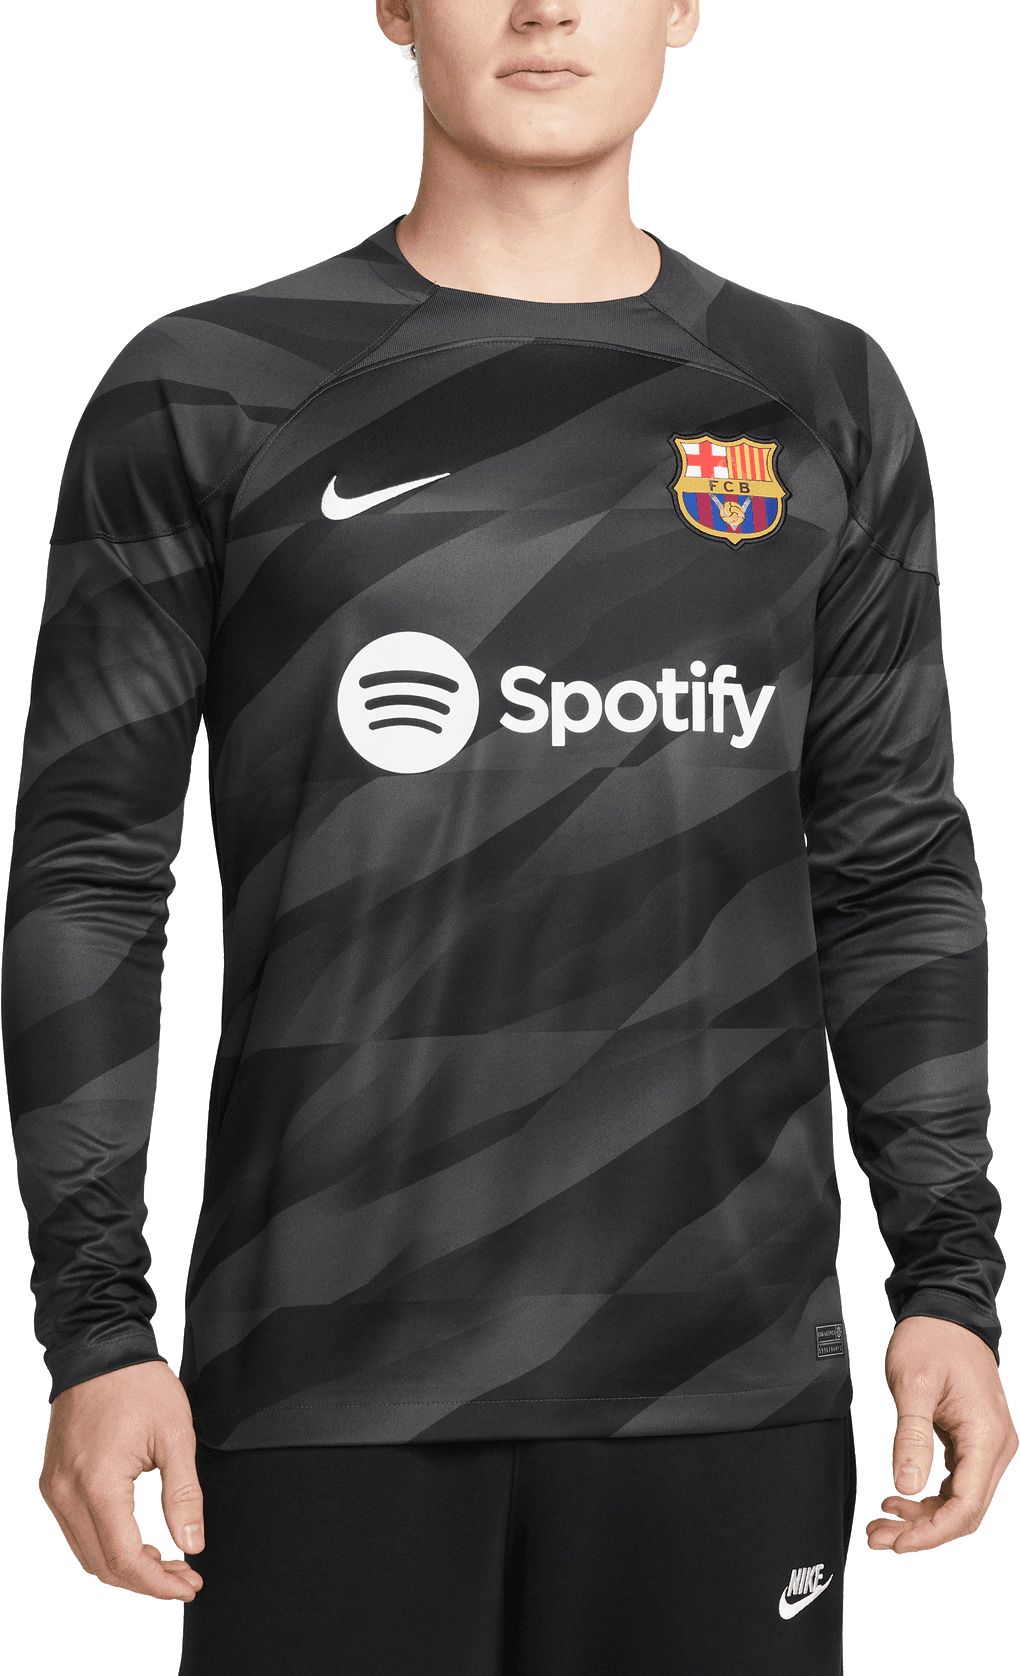 barcelona jersey in store